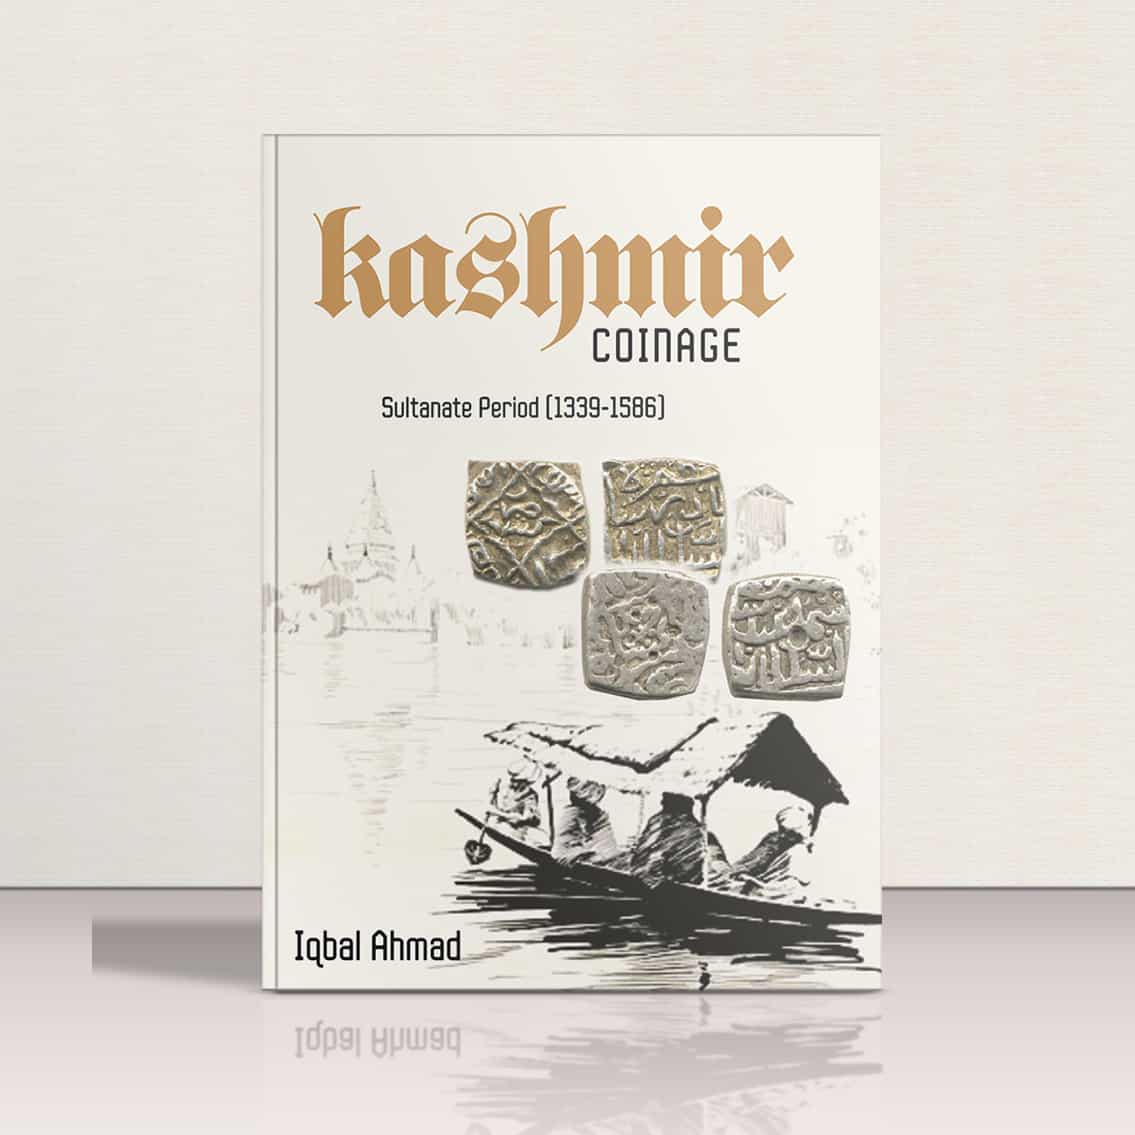 Kashmir Coinage by Iqbal Ahmad